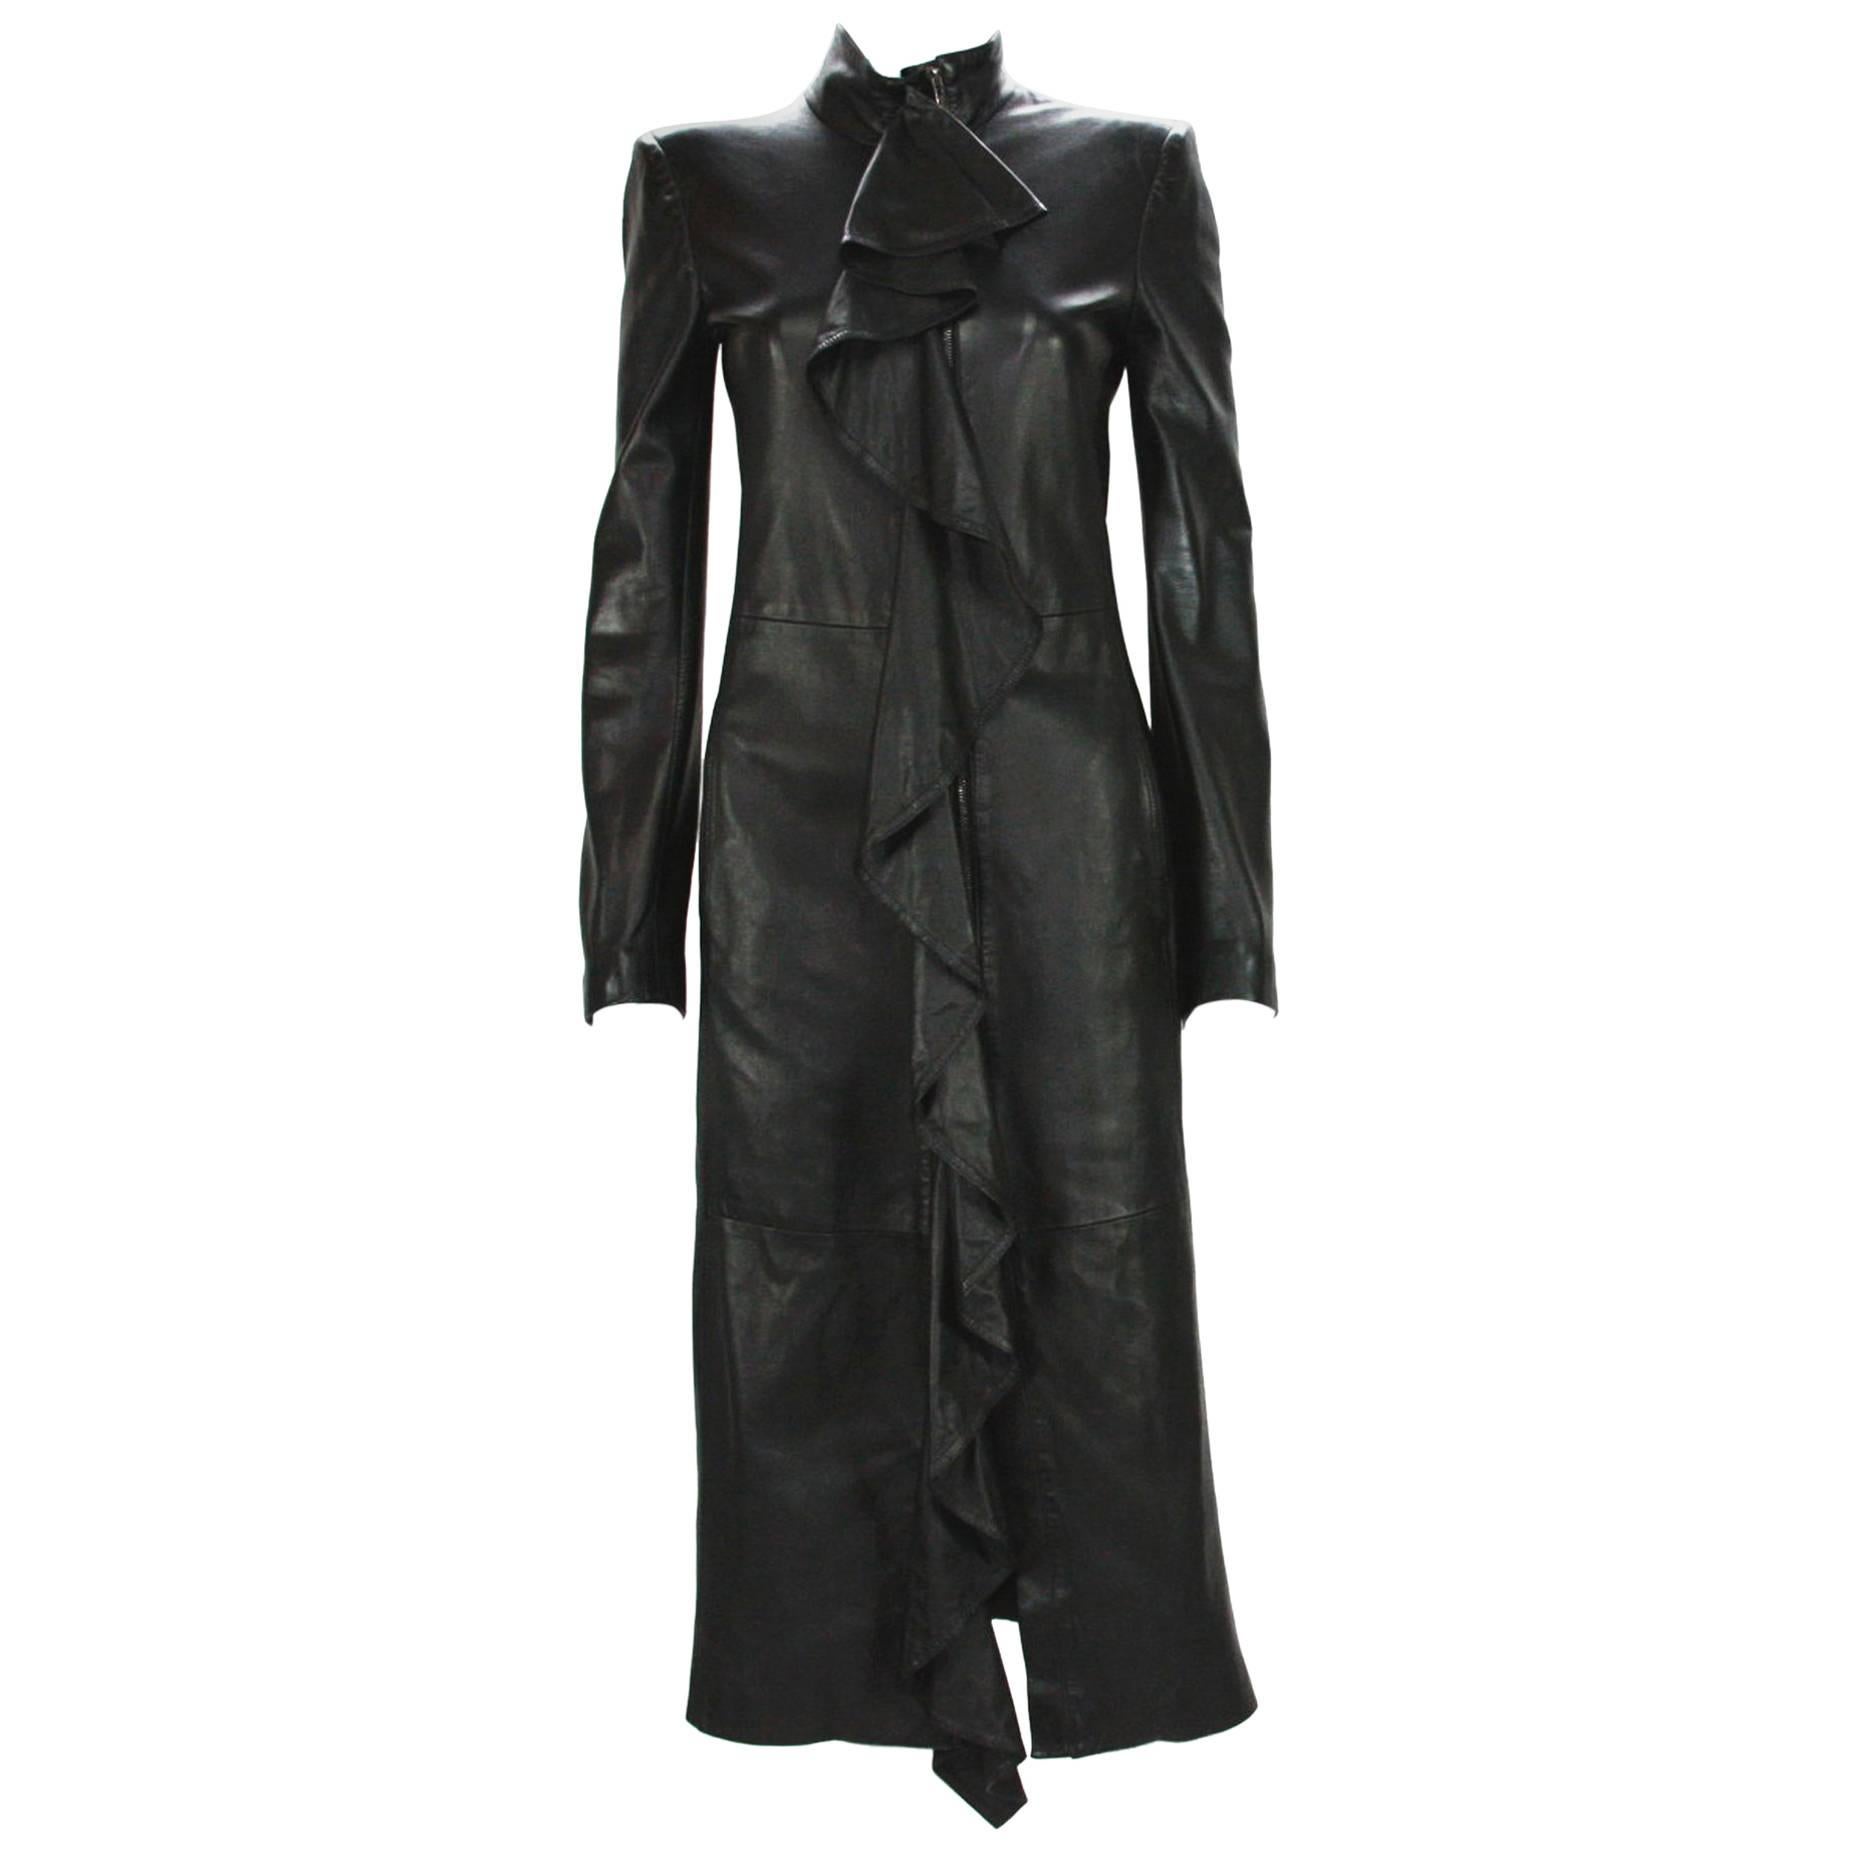 TOM FORD for YVES SAINT LAURENT F/W 2003 Black Leather Ruffle Coat Fr.36 US 4